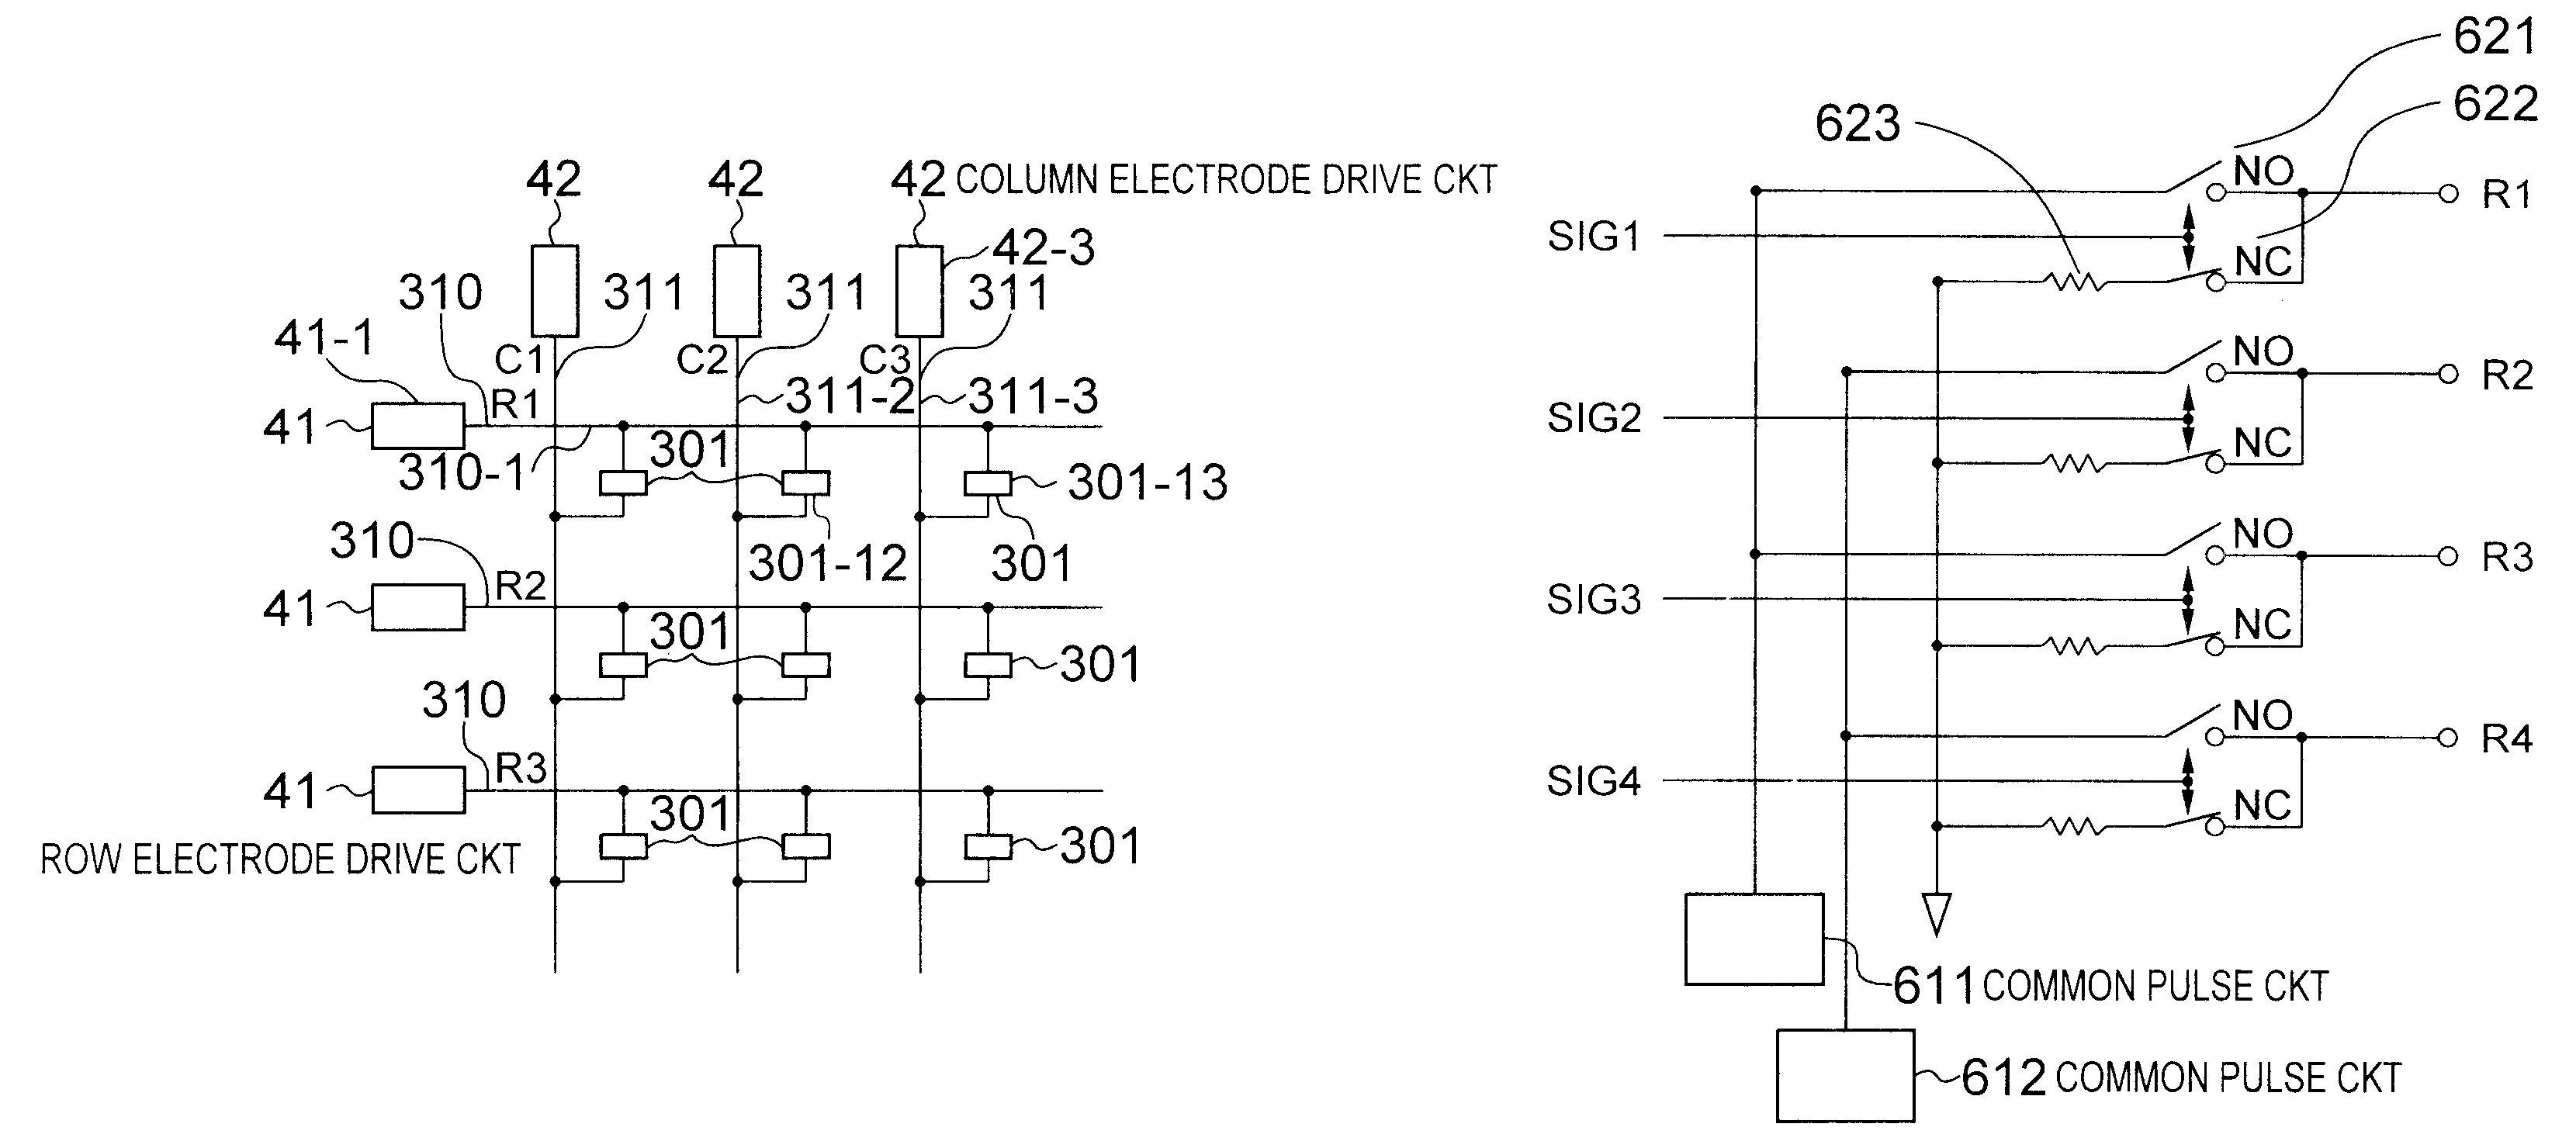 Display apparatus using luminance modulation elements